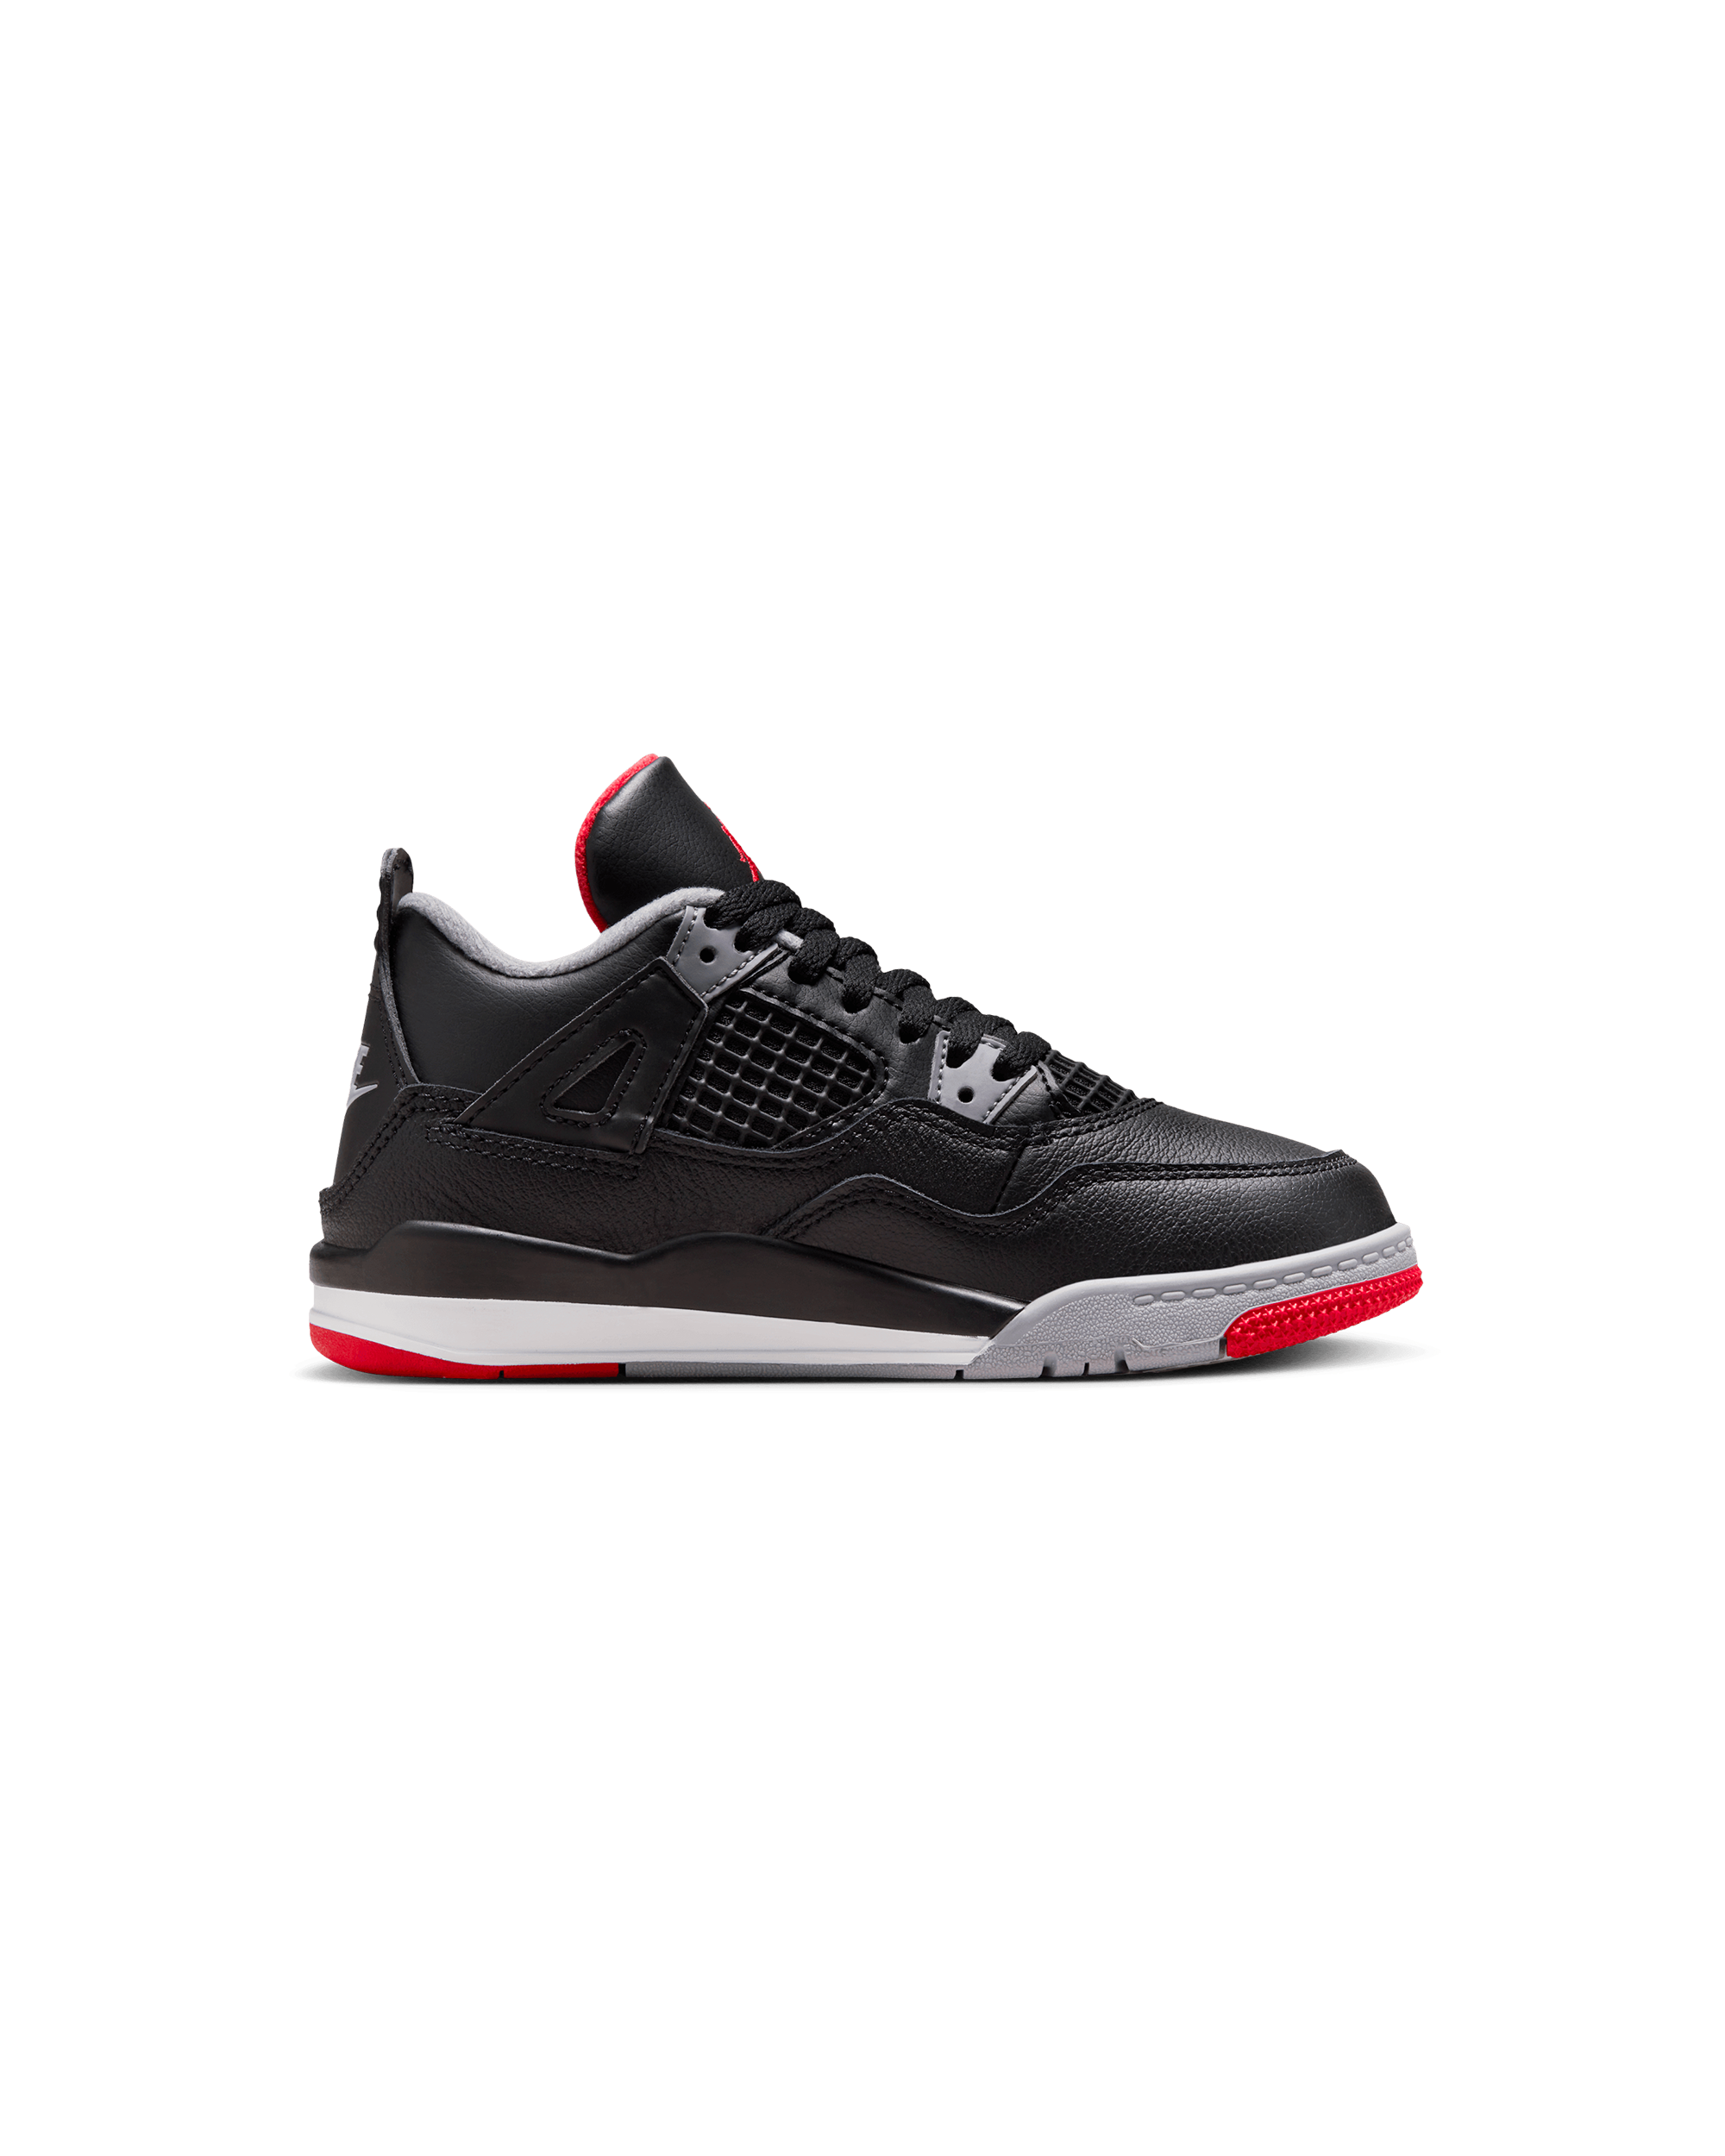 Air Jordan 4 Retro "Bred Reimagined" (PS) - Black / Fire Red / Grey / White